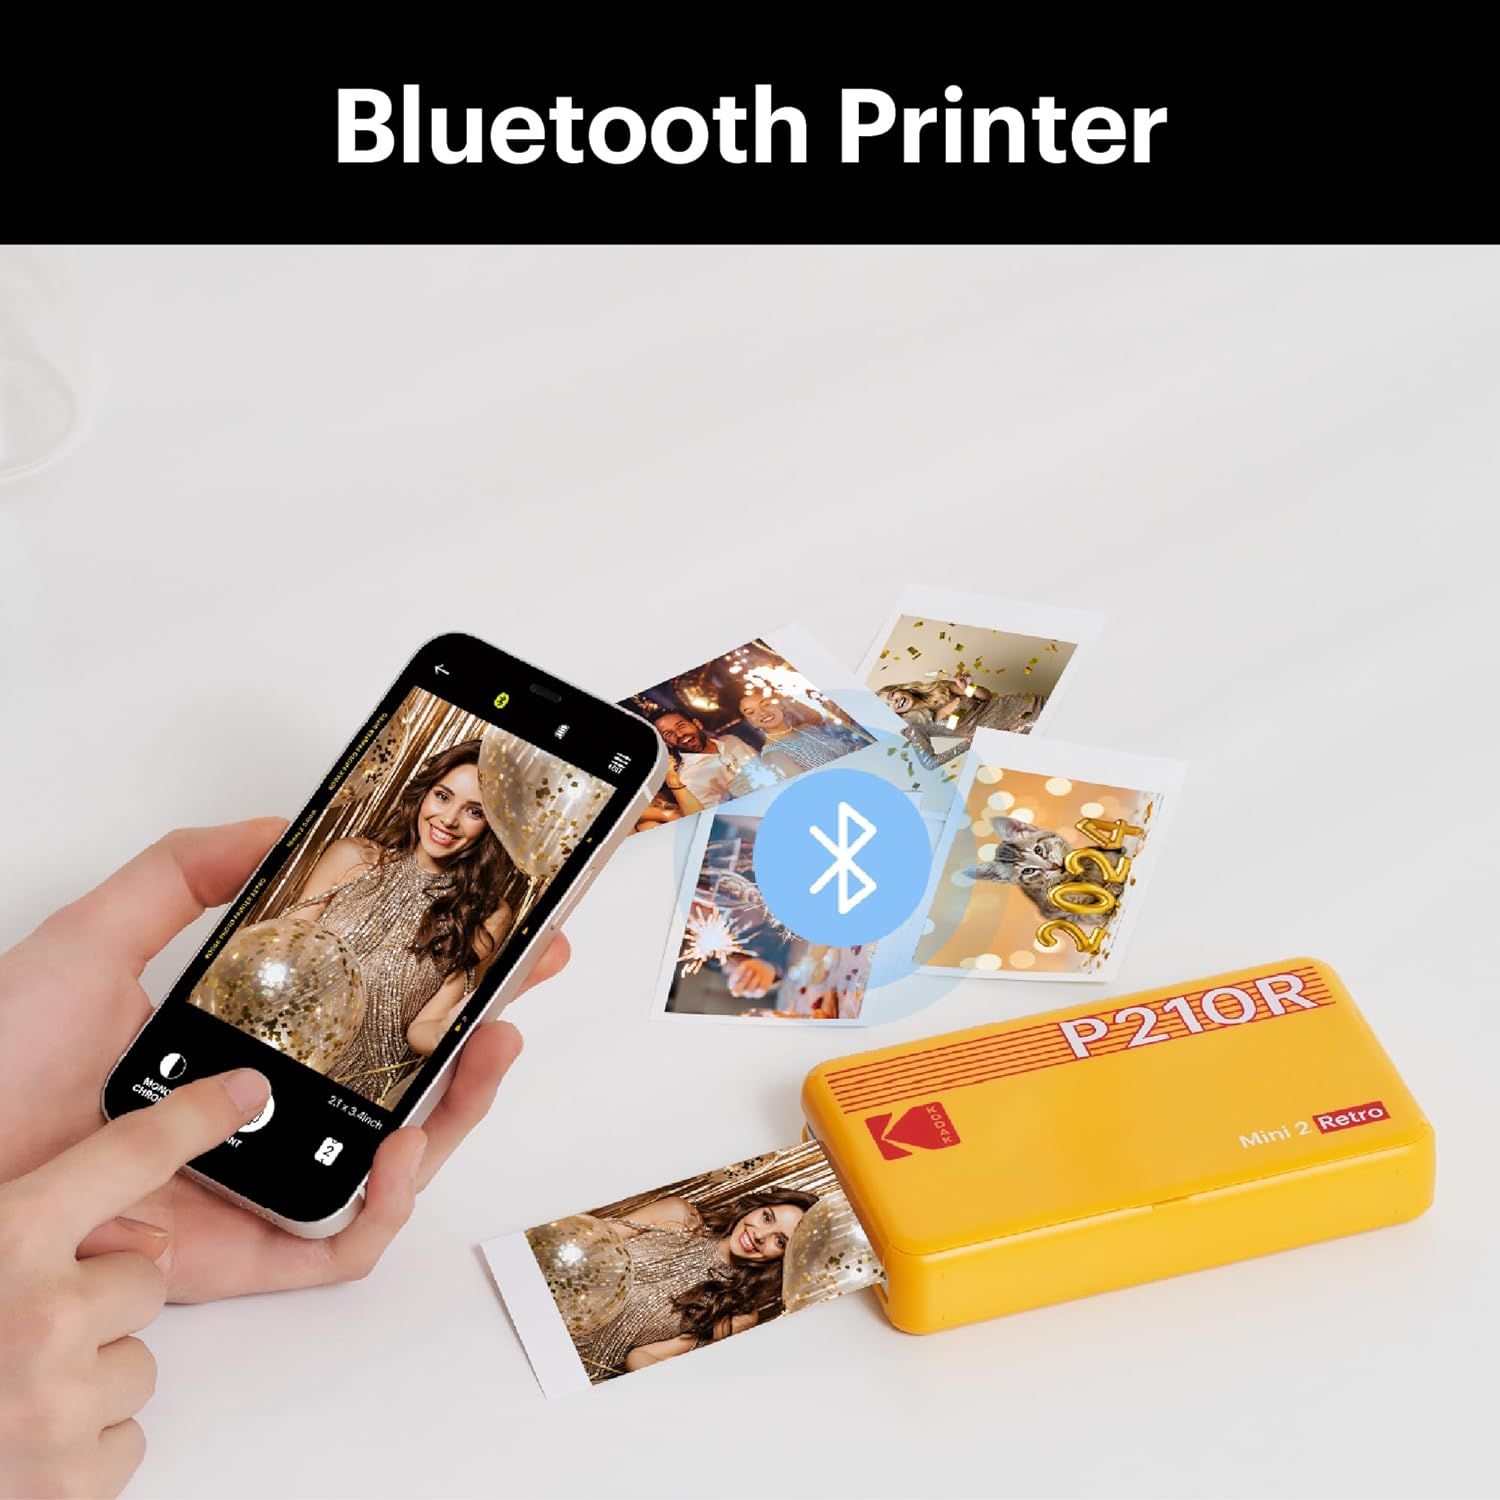 KODAK Mini 2 Retro Portable Instant Photo Printer, Wireless